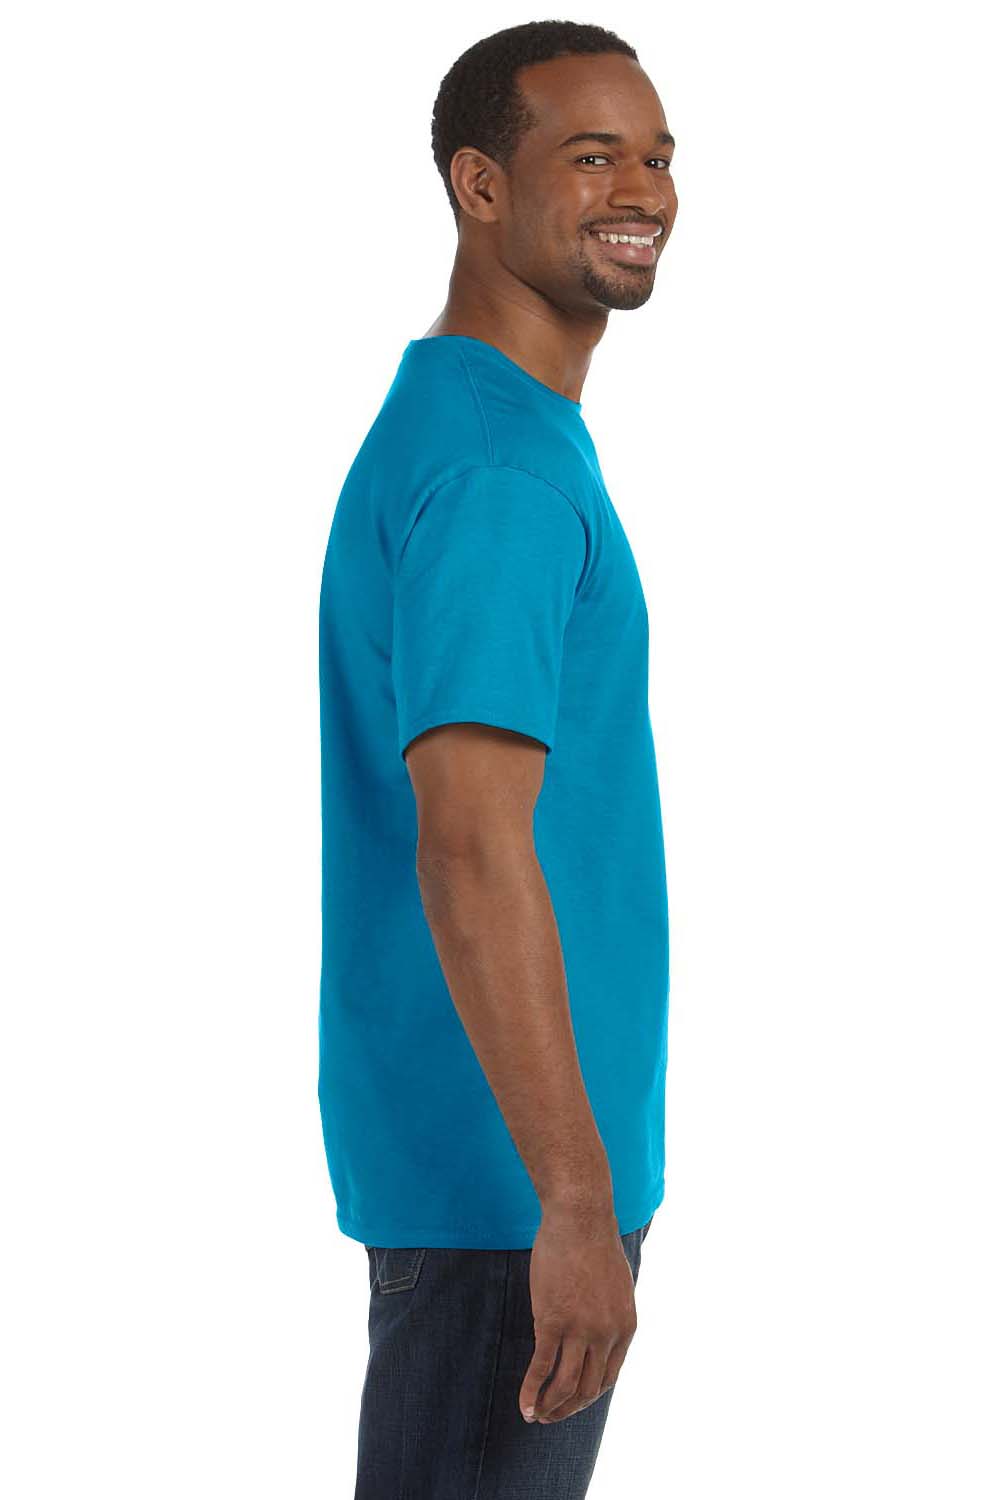 Hanes 5250T Mens ComfortSoft Short Sleeve Crewneck T-Shirt Teal Blue Side